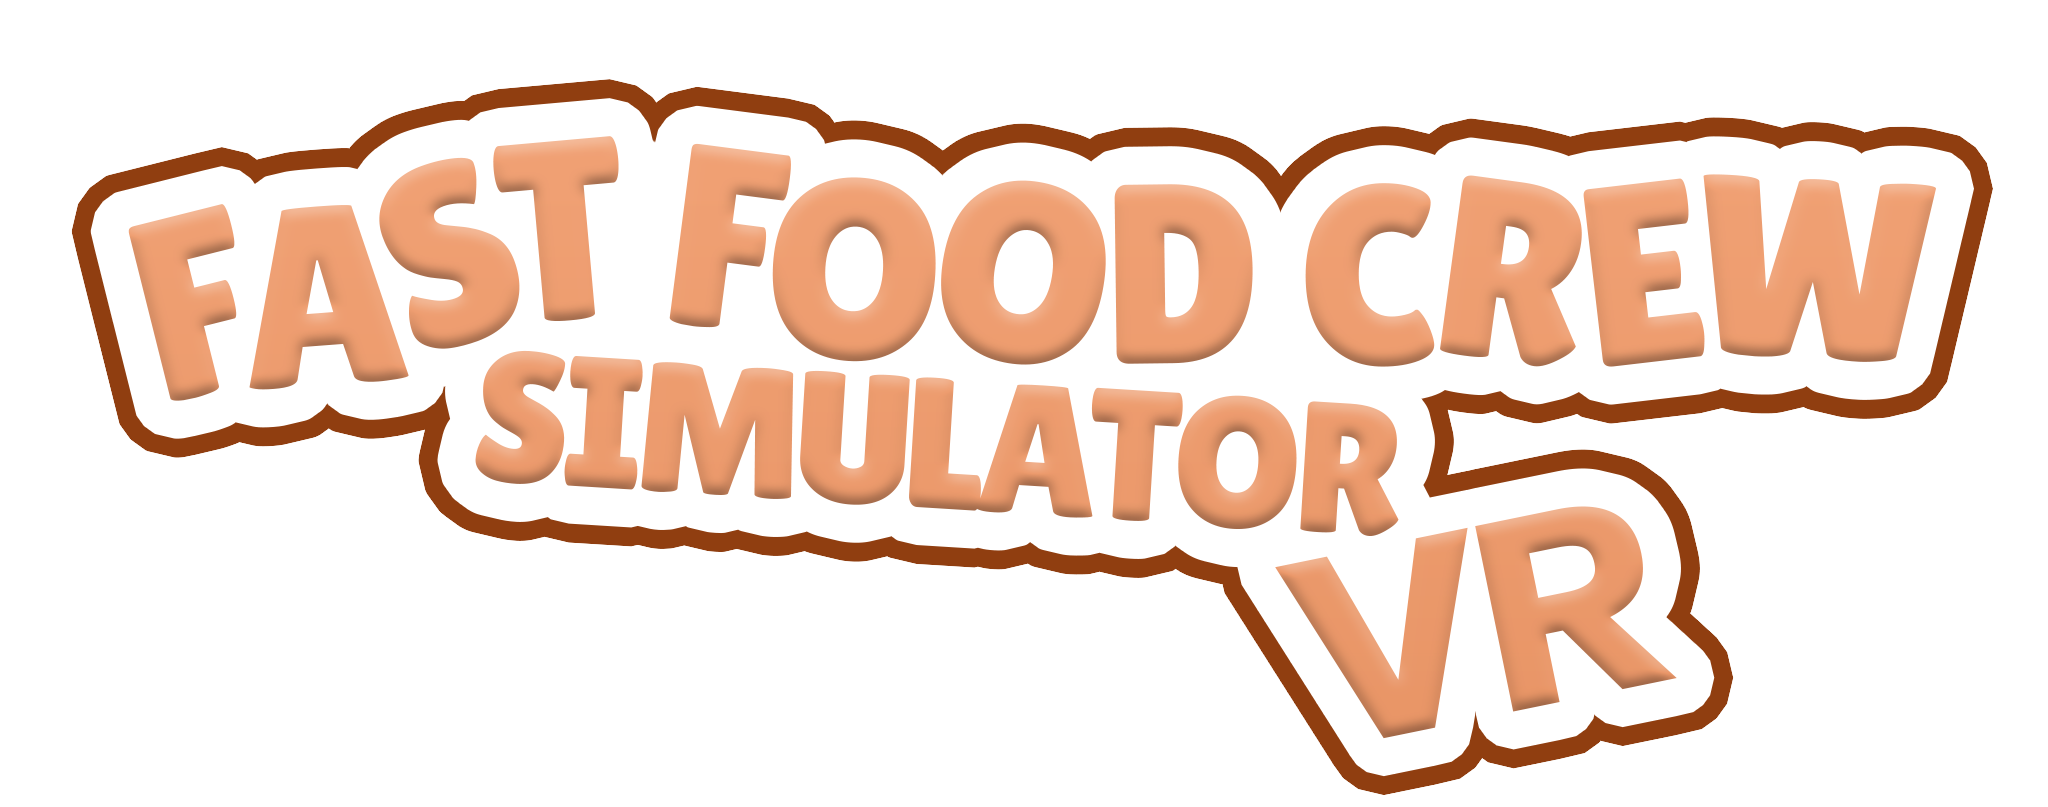 Fast Food Crew Simulator VR